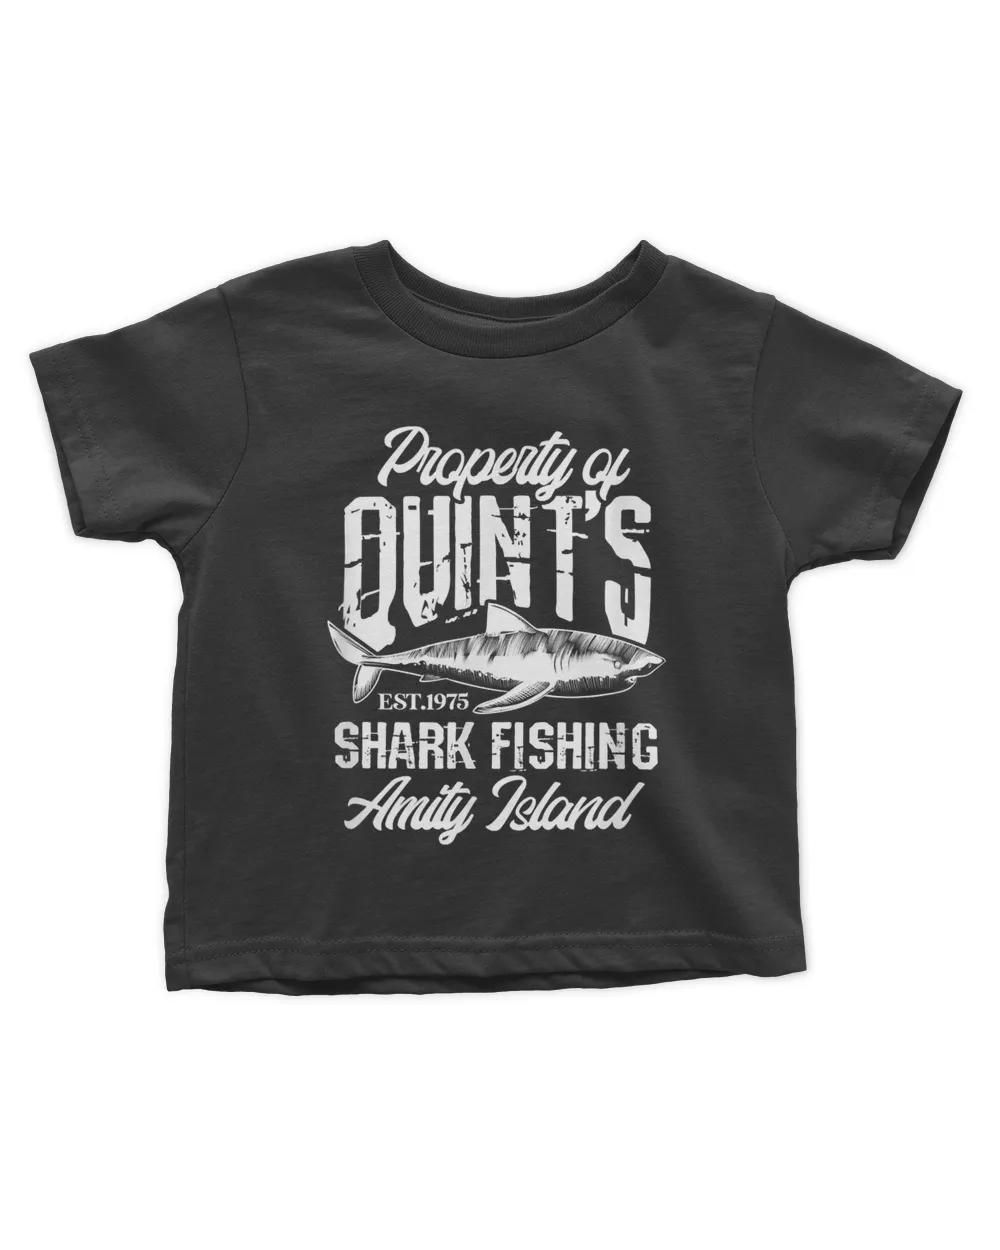 Quint's Shark Fishing Amity Island 1975